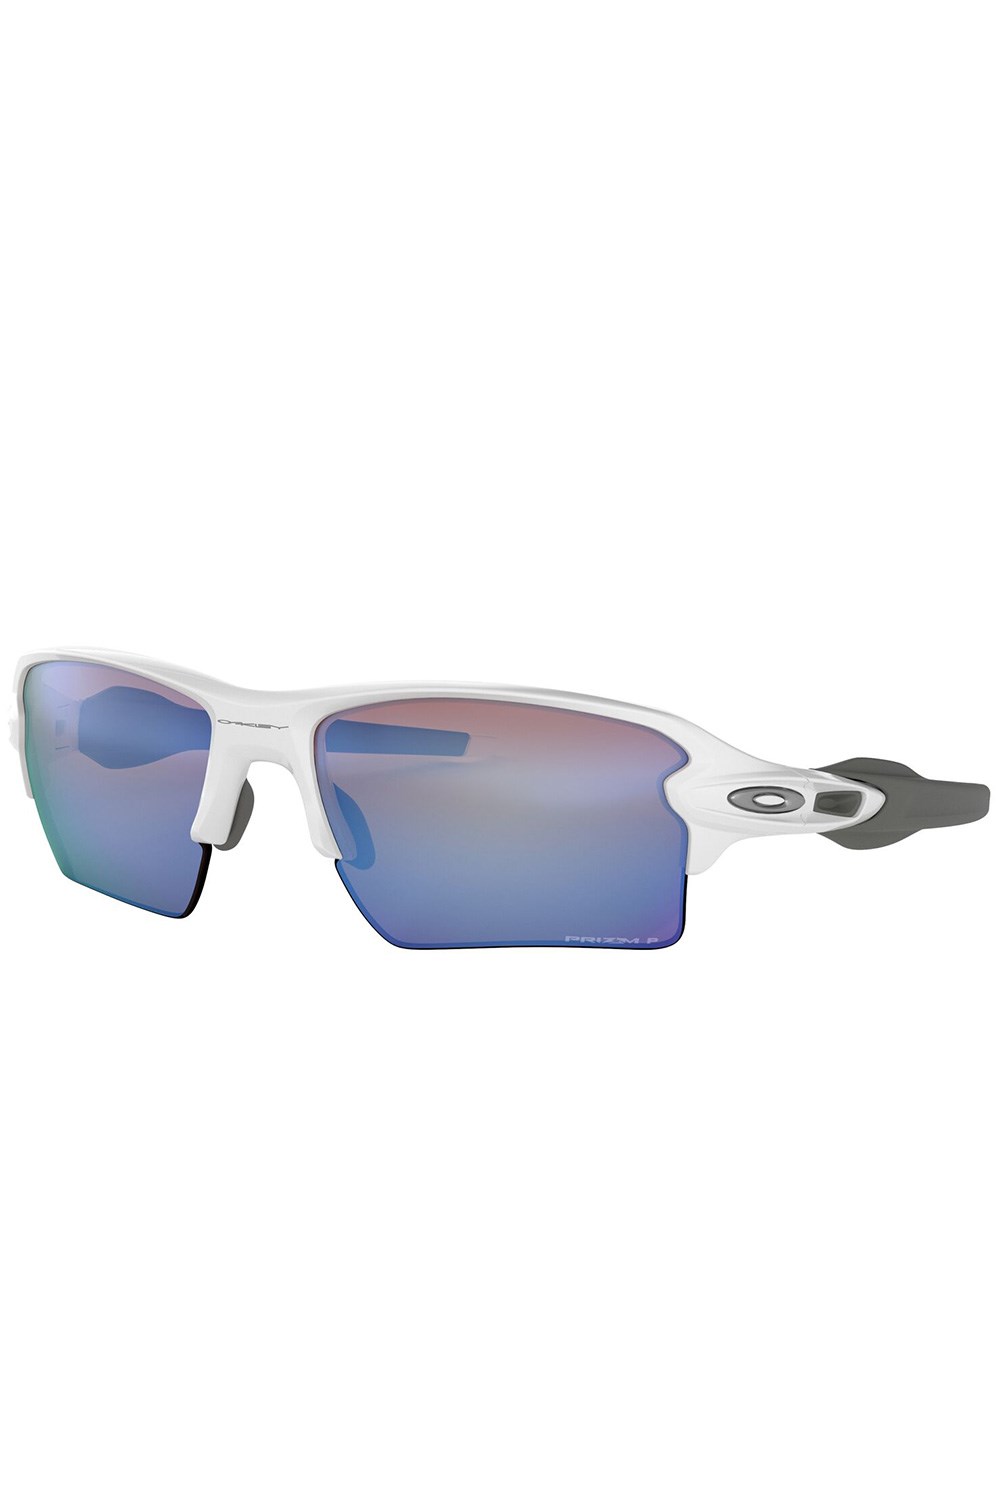 Flak 2. 0 XL Unisex Cycling Sunglasses -